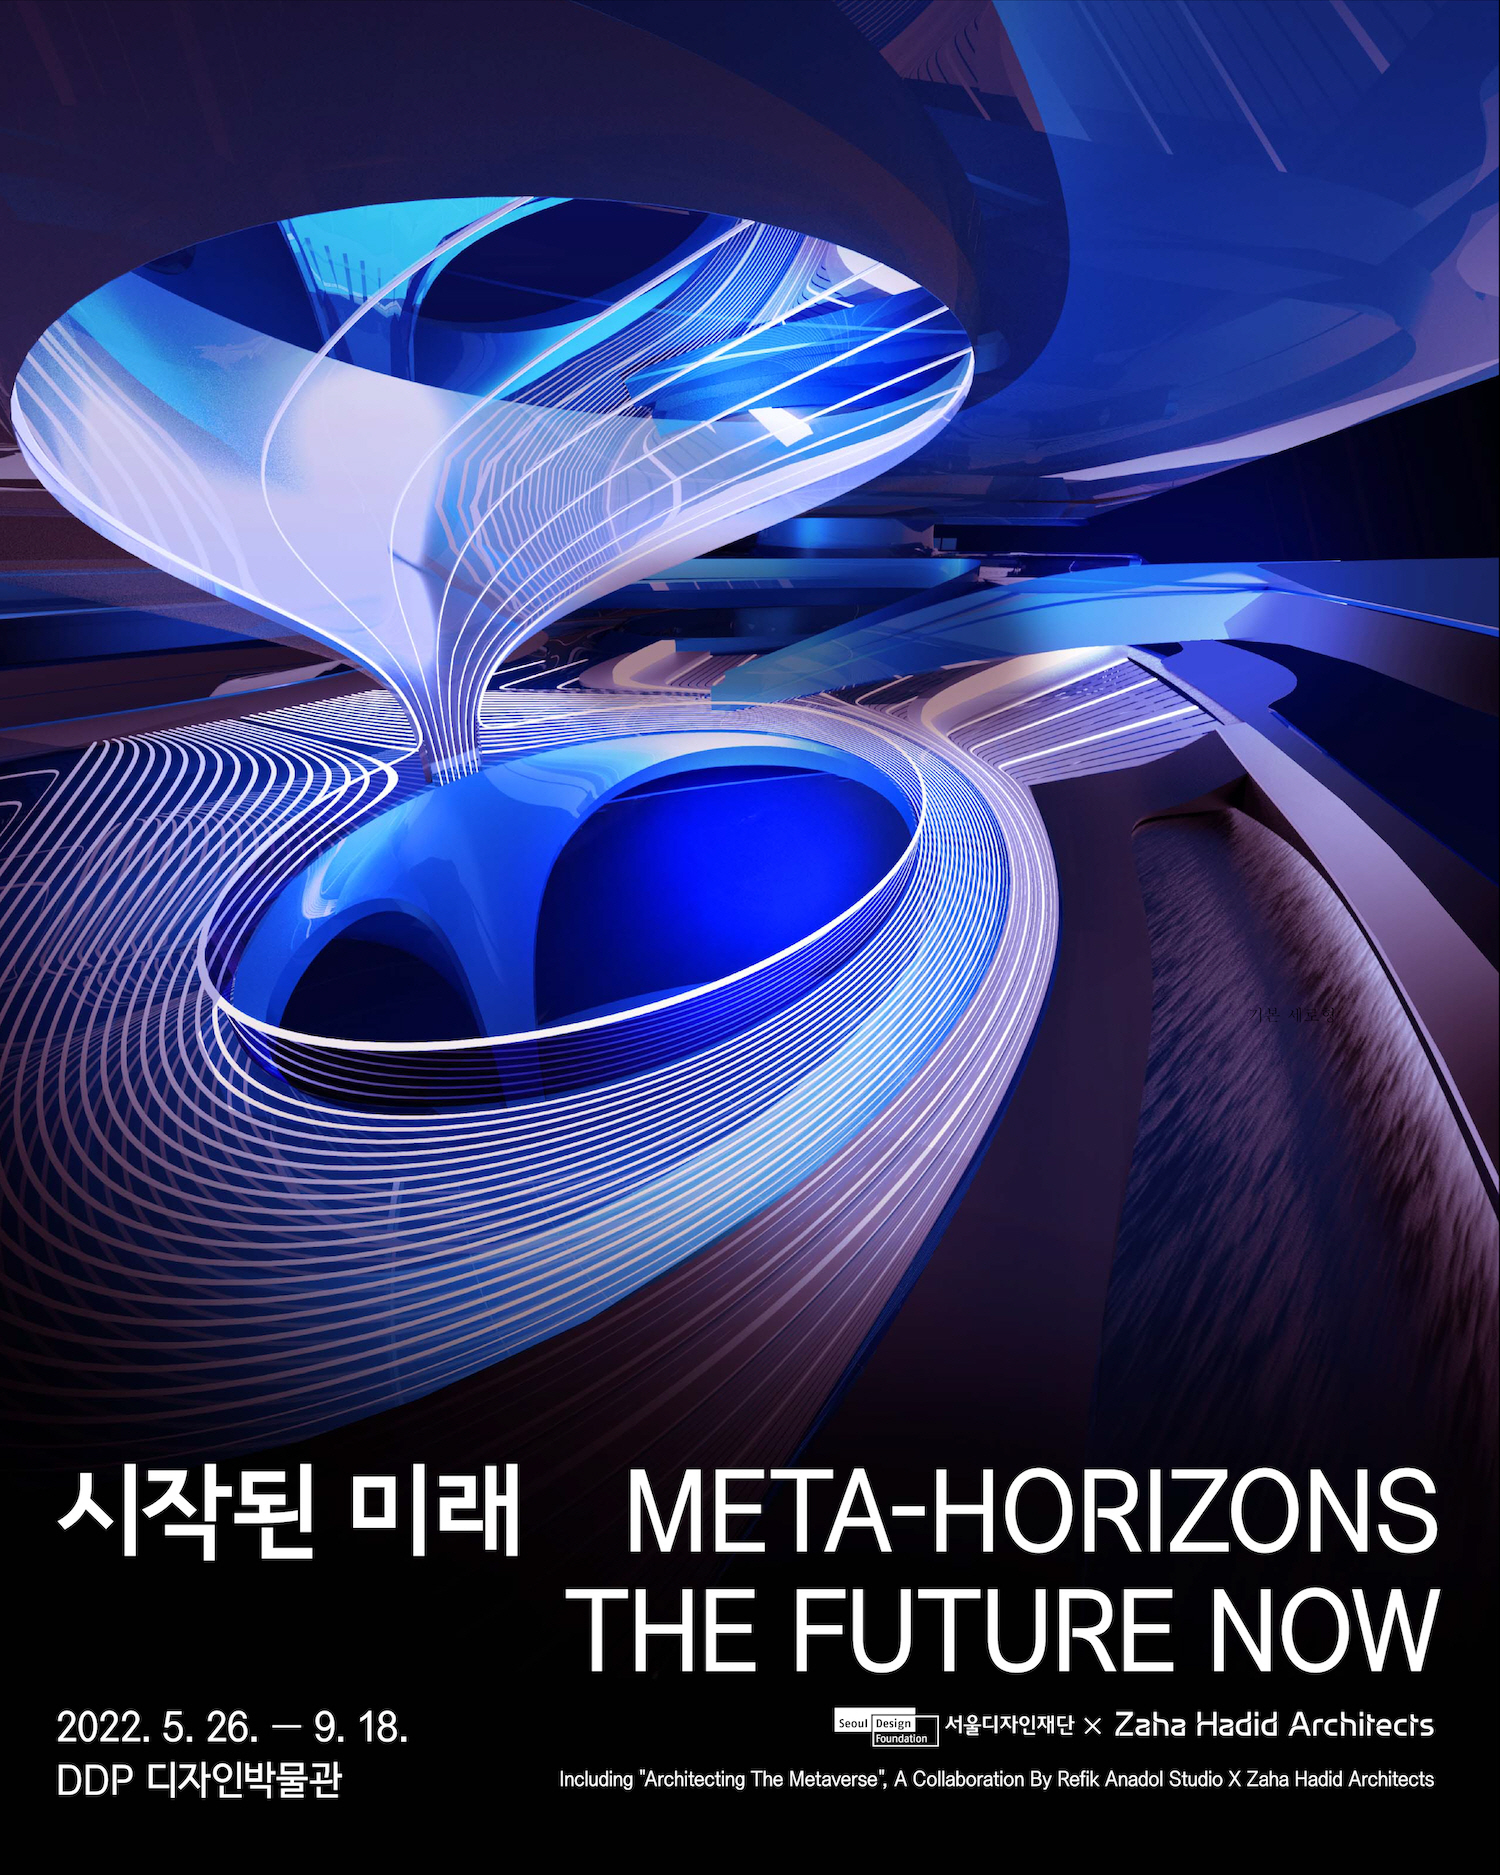 Horizons : The Future Now